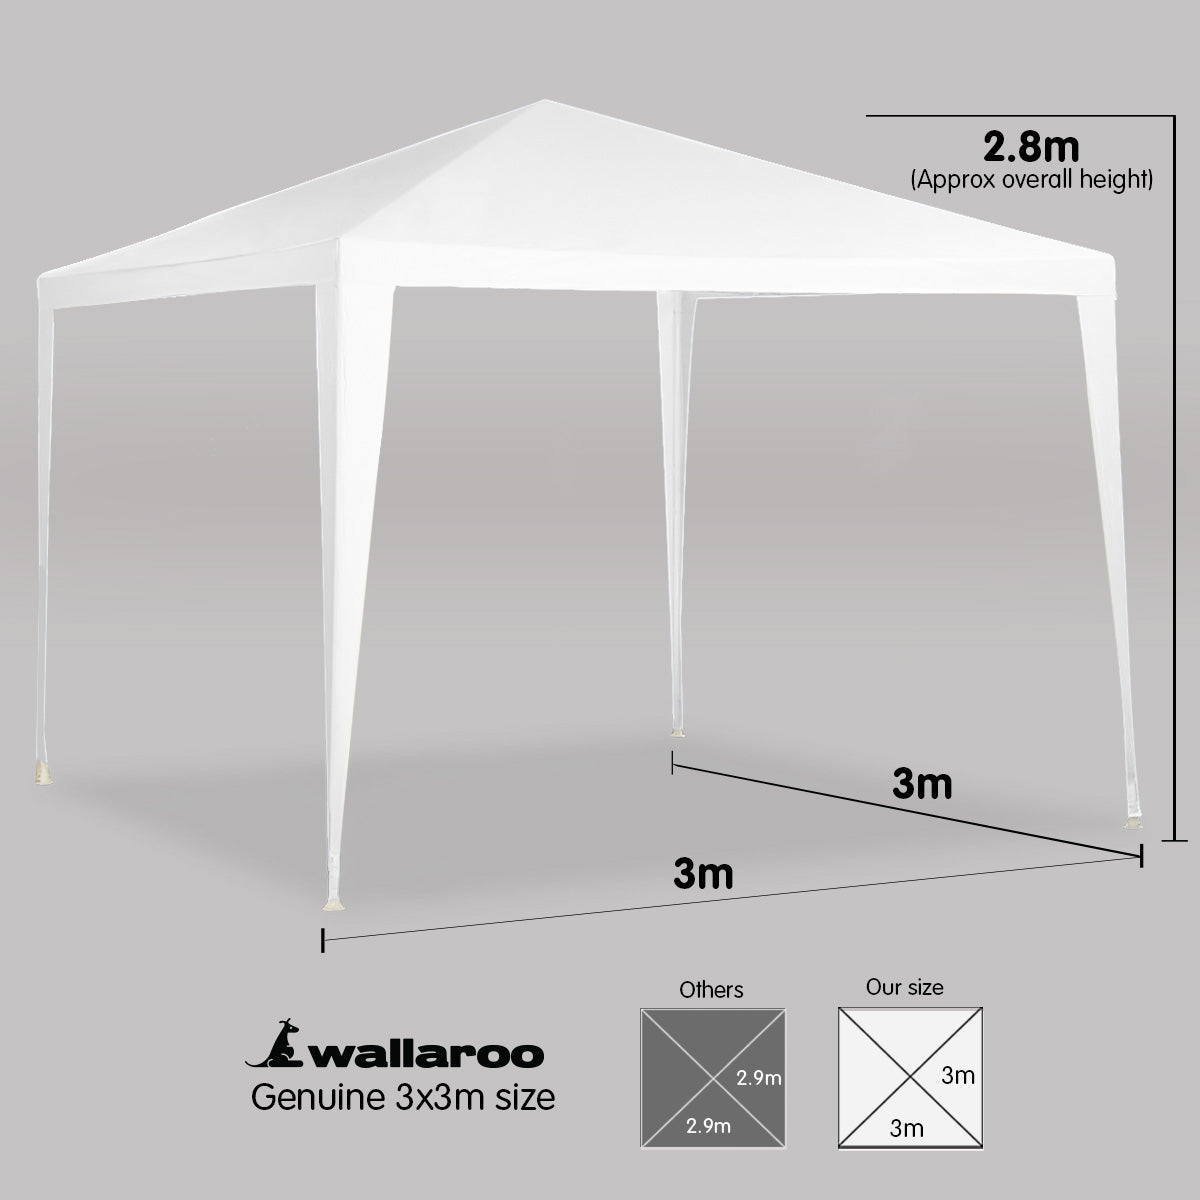 Wallaroo 3x3m Outdoor Party Wedding Event Gazebo Tent - White